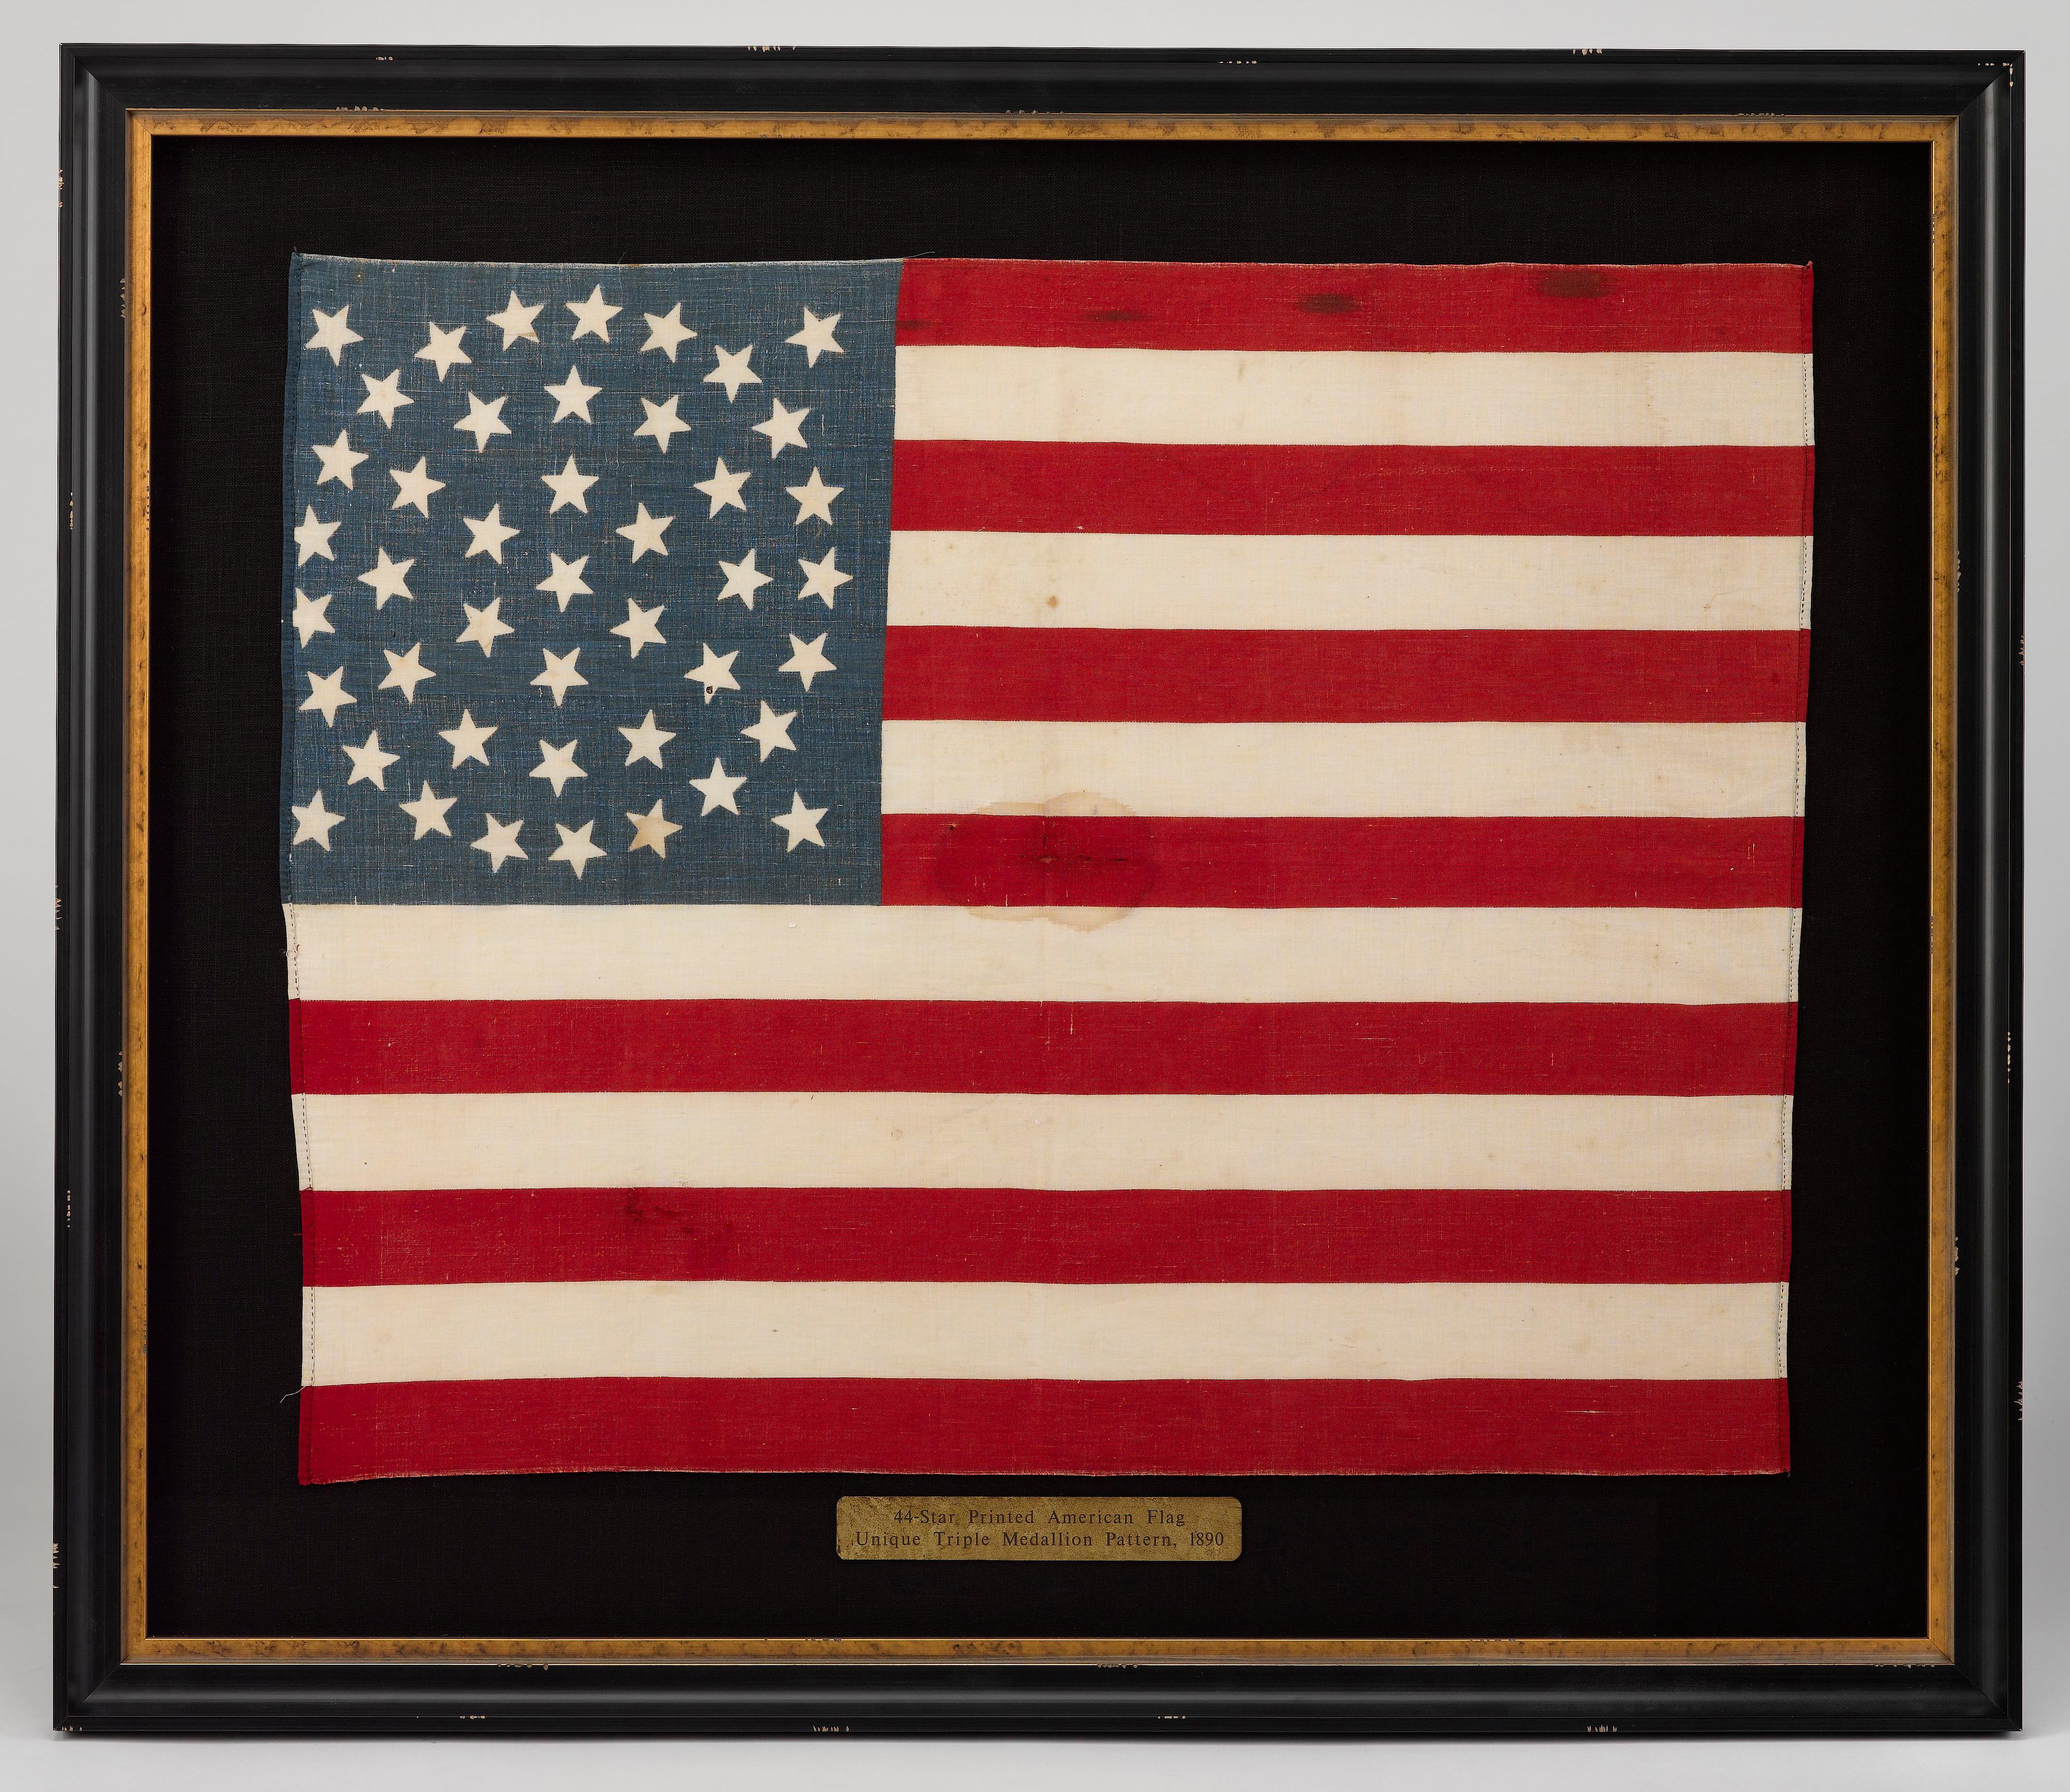 44-Star Printed American Flag, Unique Triple Medallion Pattern, 1890 1